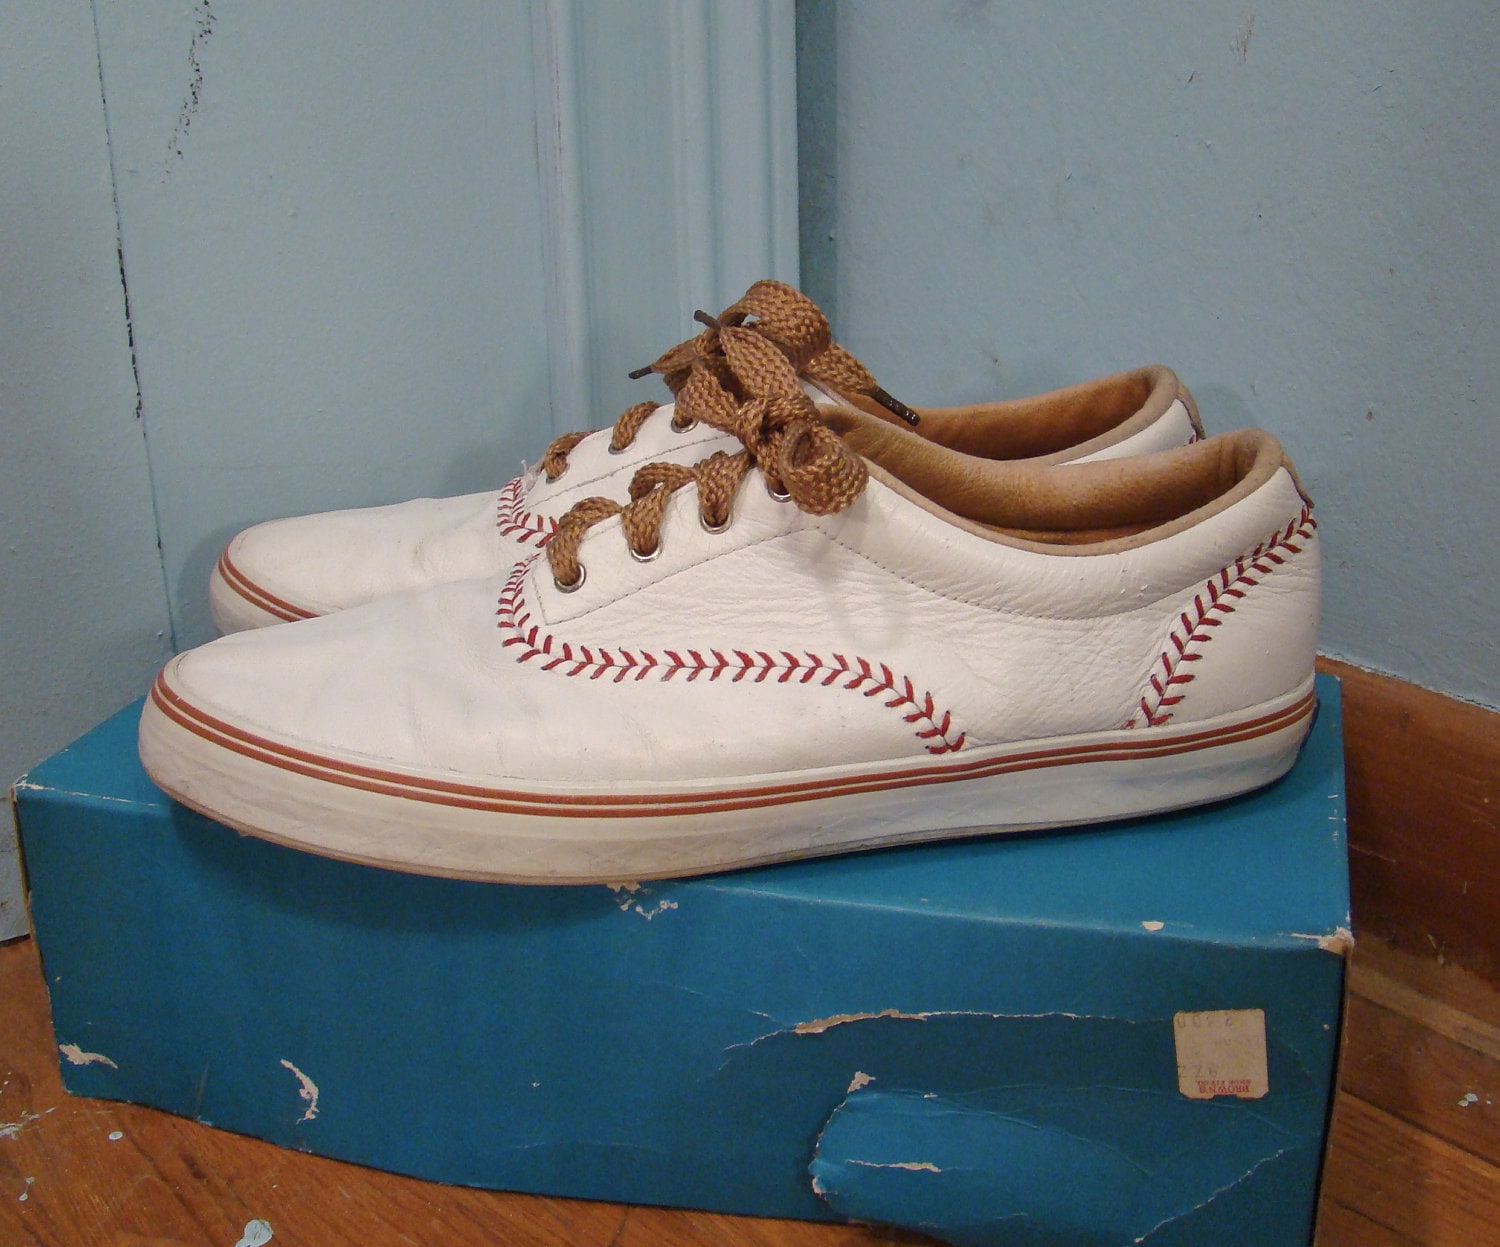 Baseball Keds Tennis Shoes White Leather 1990's